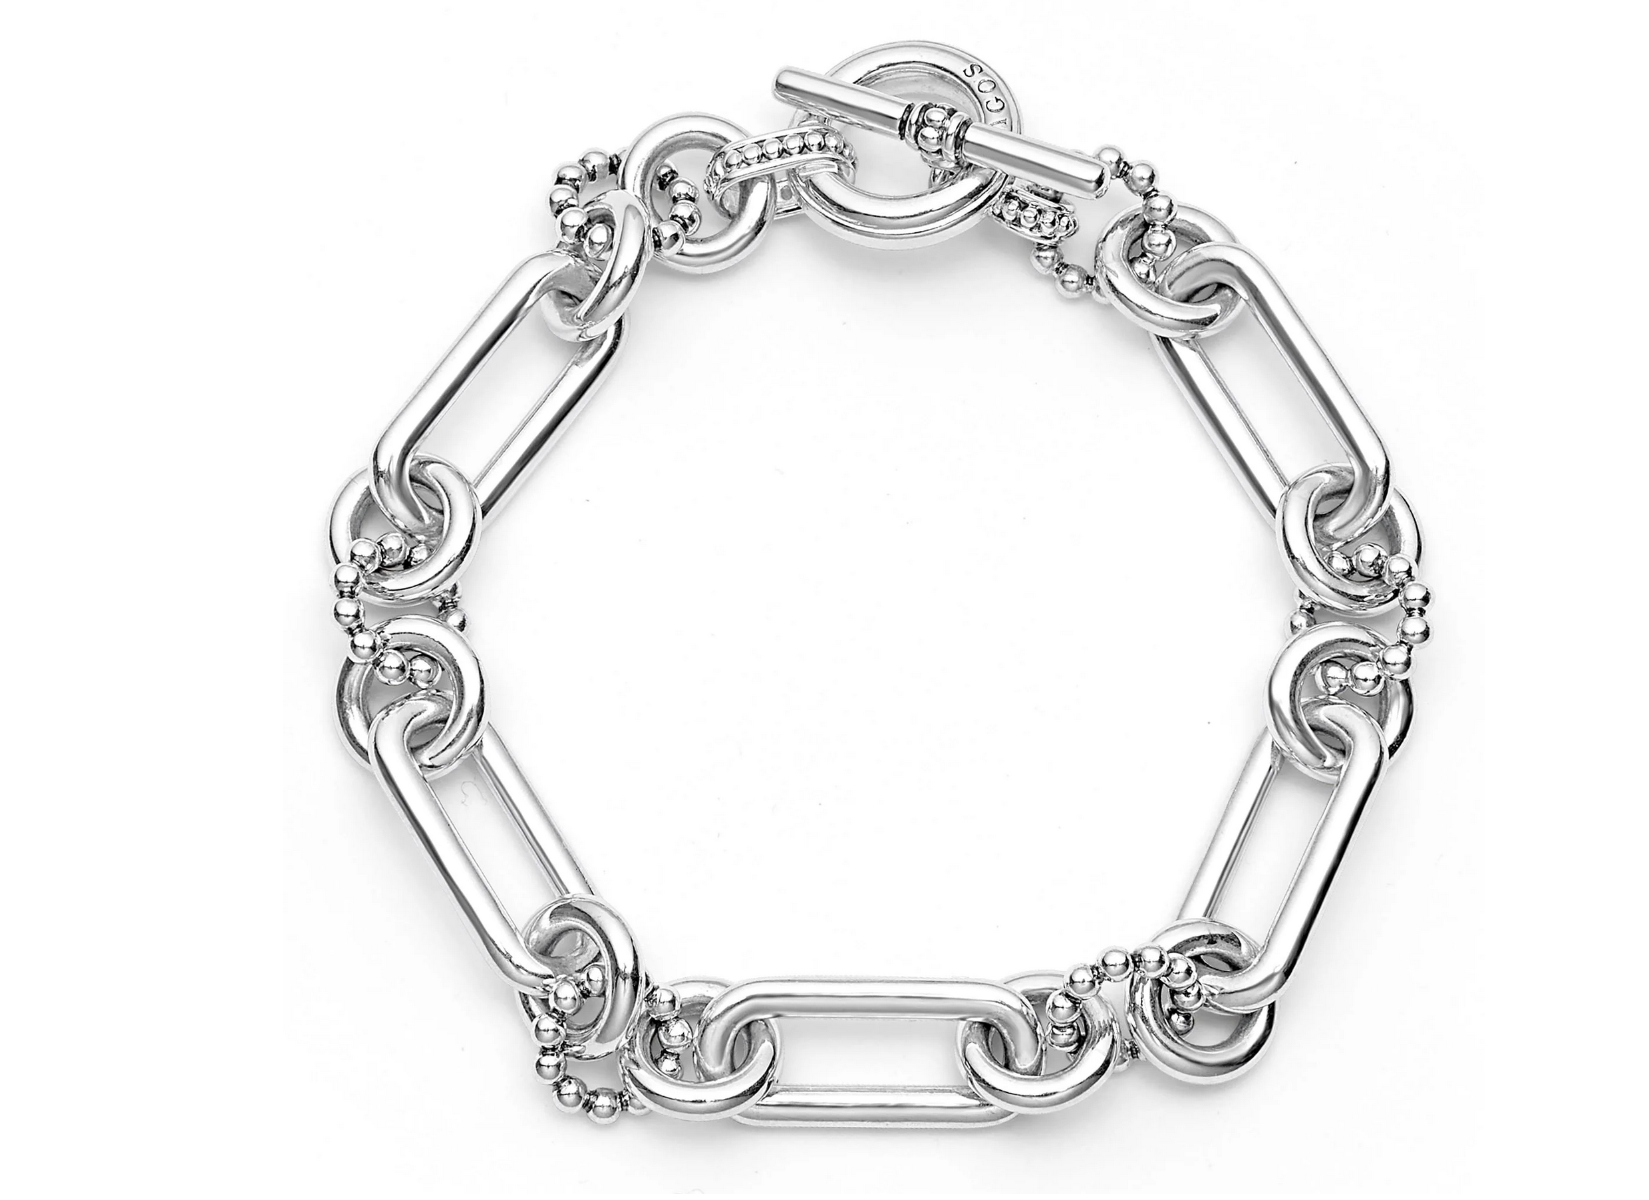 LAGOS "Signature Caviar" Sterling Silver Link Bracelet, Size 7